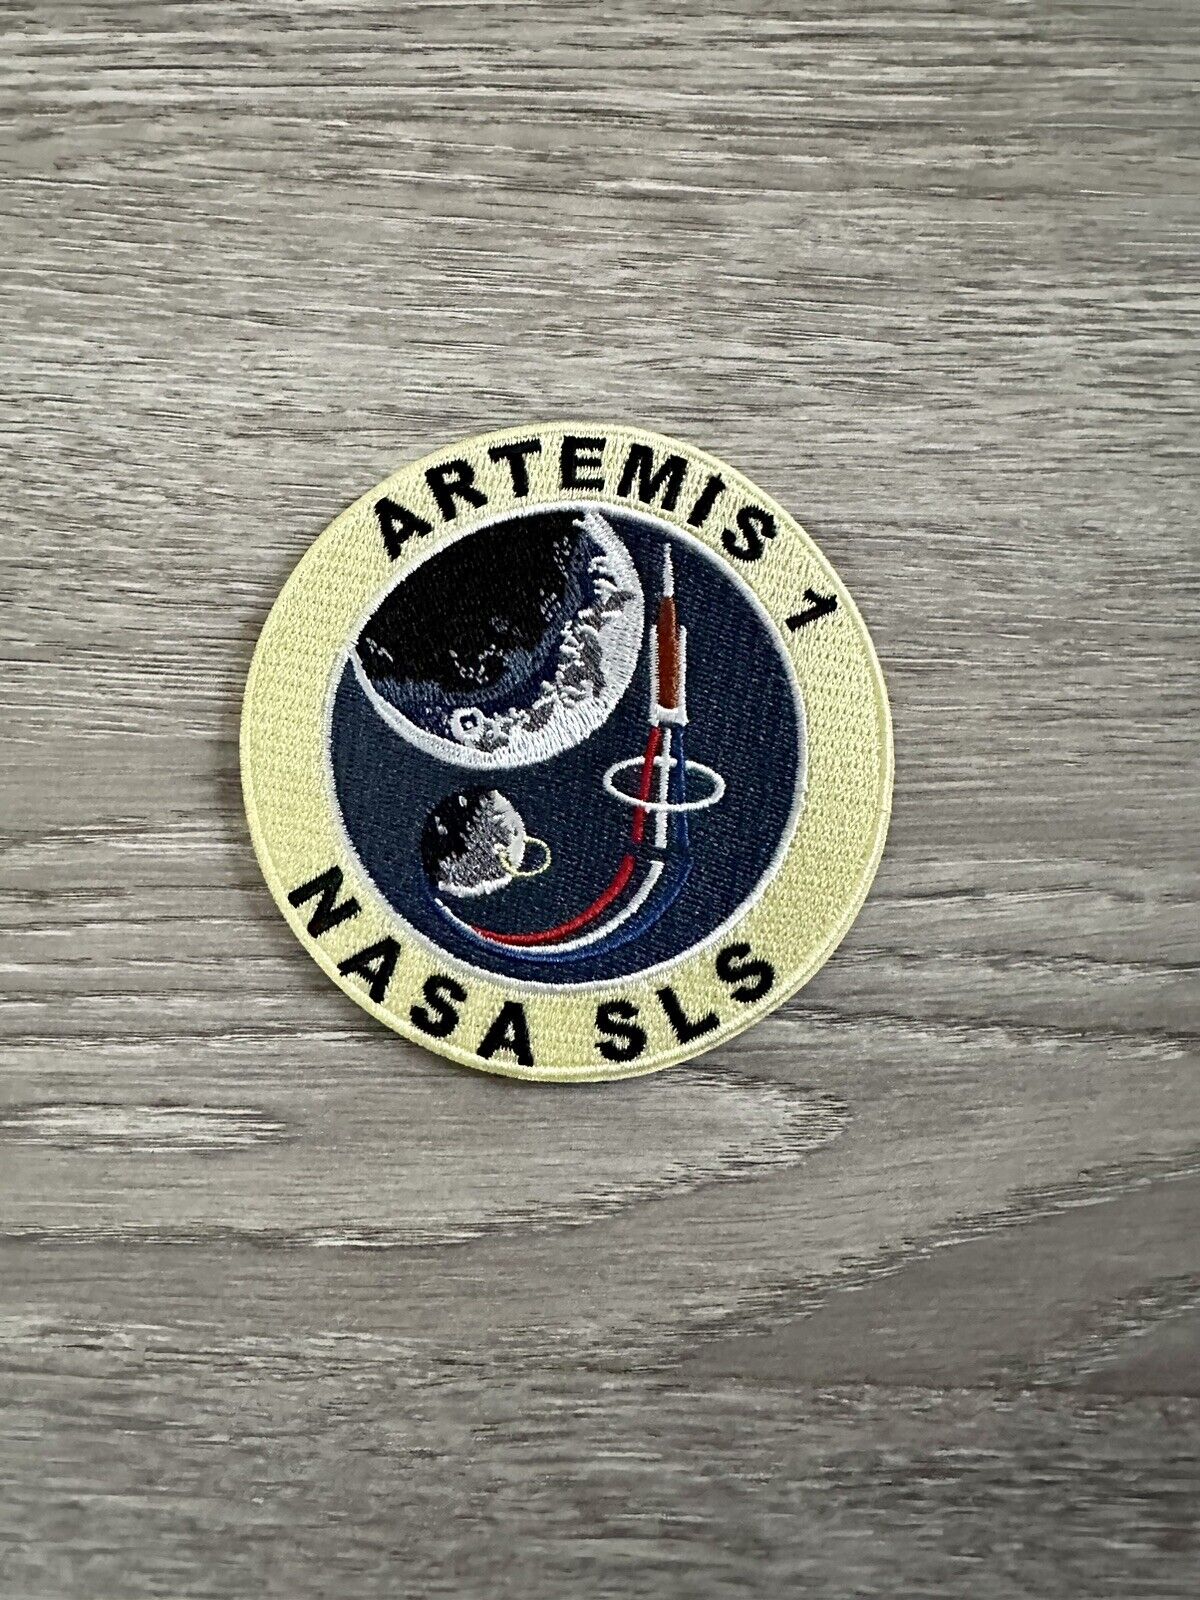 ARTEMIS 1 PROGRAM - NASA SLS MOON JUMP ASTRONAUT MISSION PATCH - 3.5”